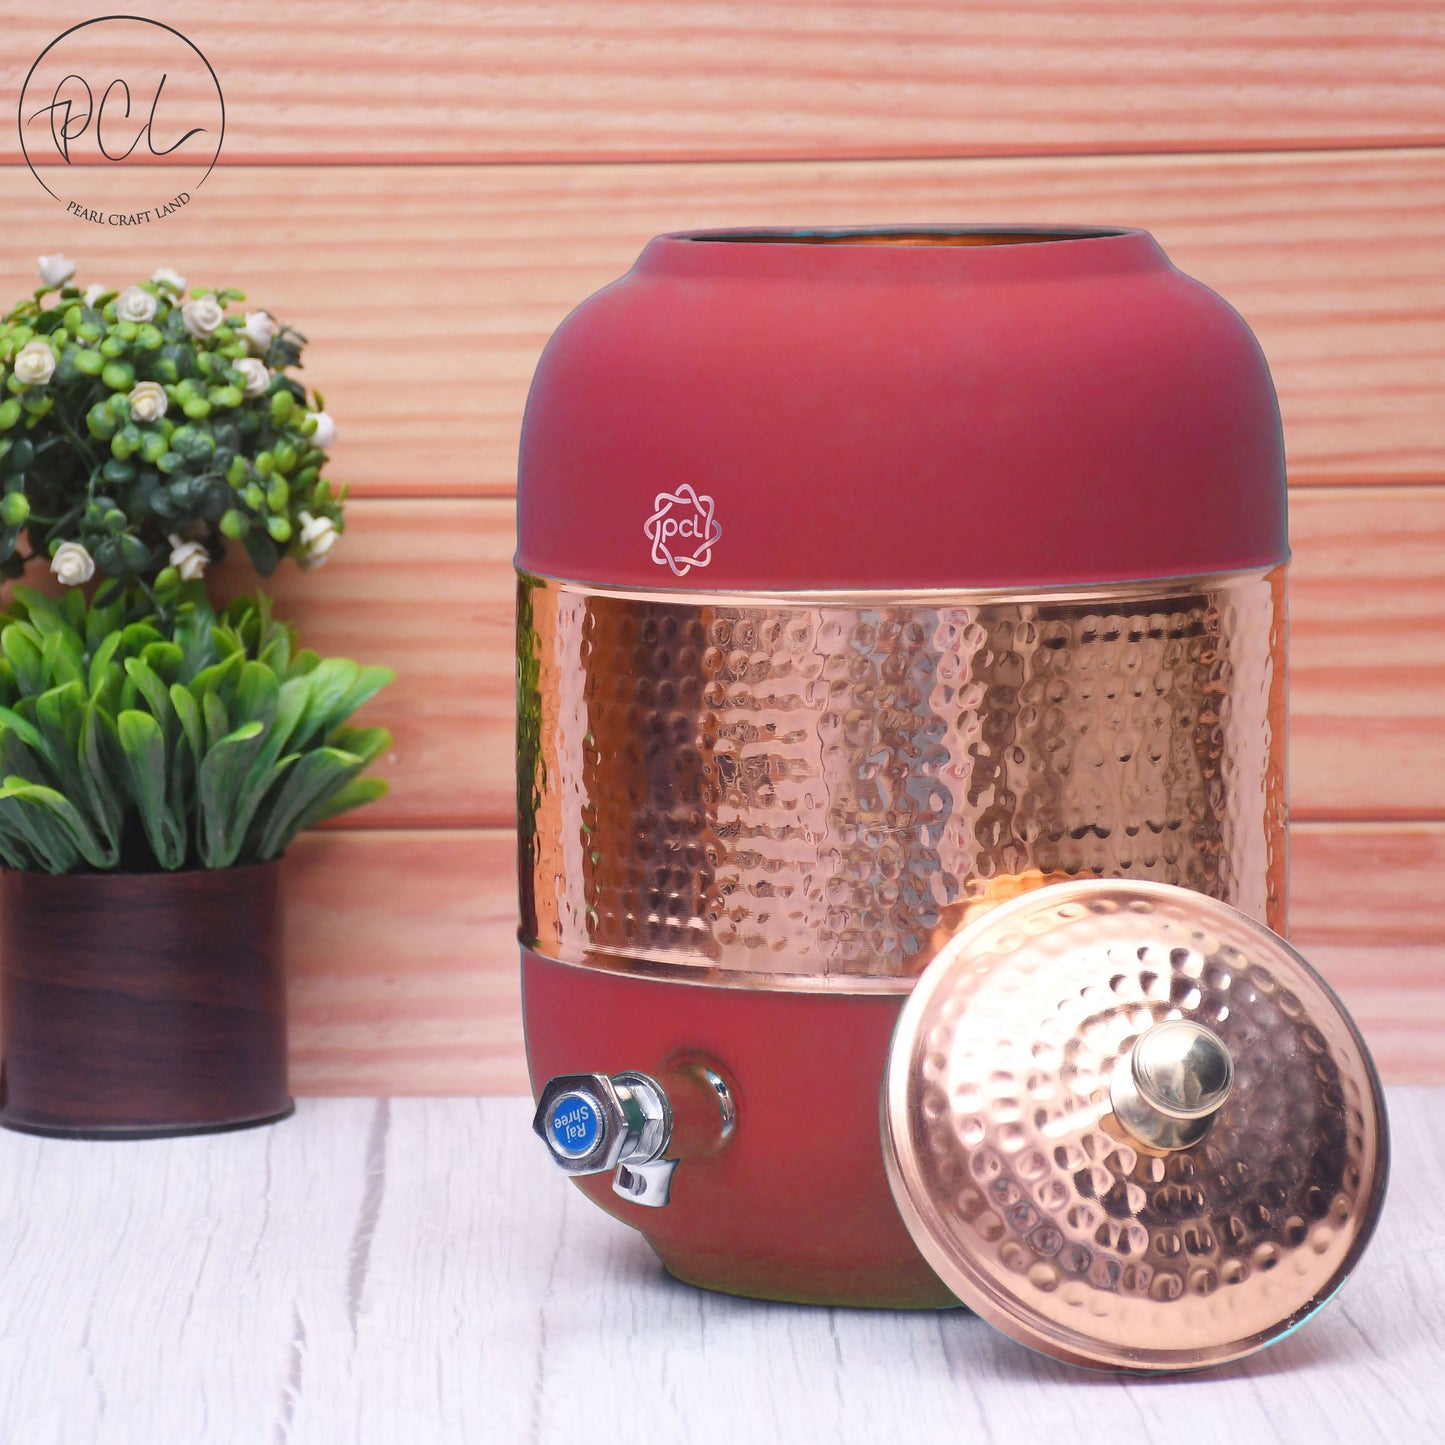 Pure Copper Silk Red Cherry Half Hammered Water Dispenser (Matka) Capacity 8000ML